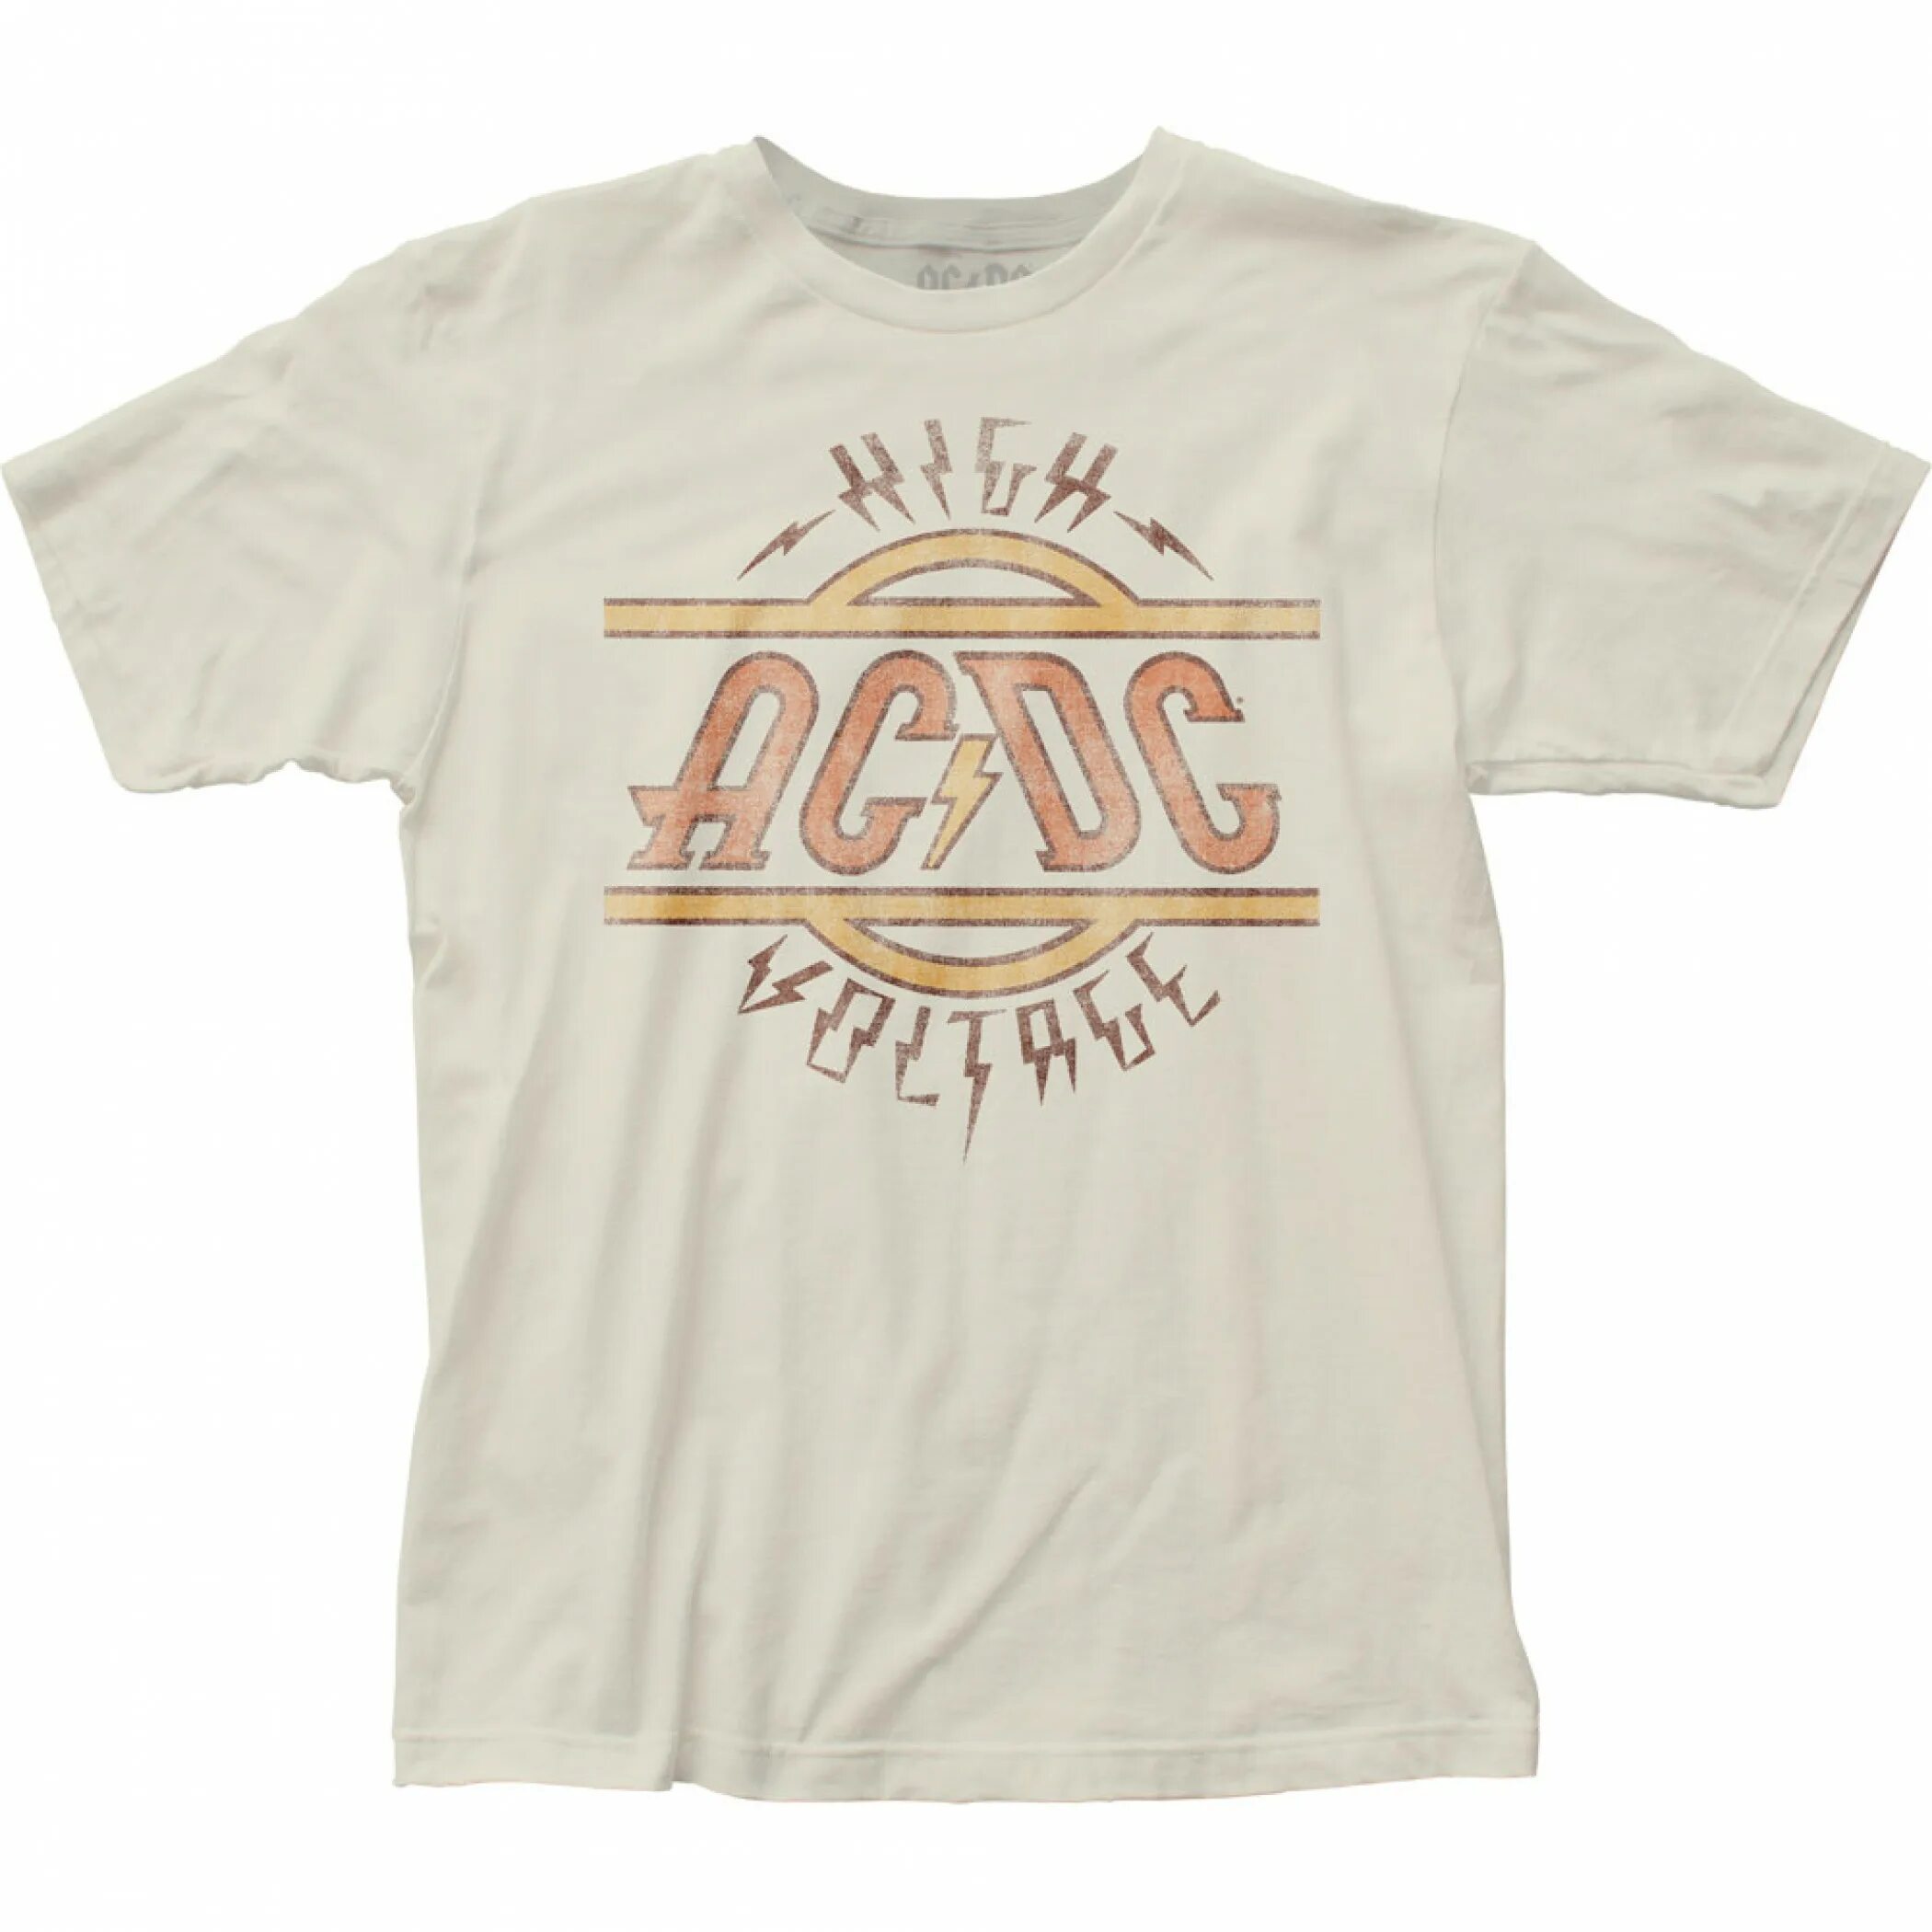 Ac dc high. Футболка AC DC High Voltage. Футболка ACDC Voltage. Винтажные футболки AC/DC. Футболка AC DC Винтаж.